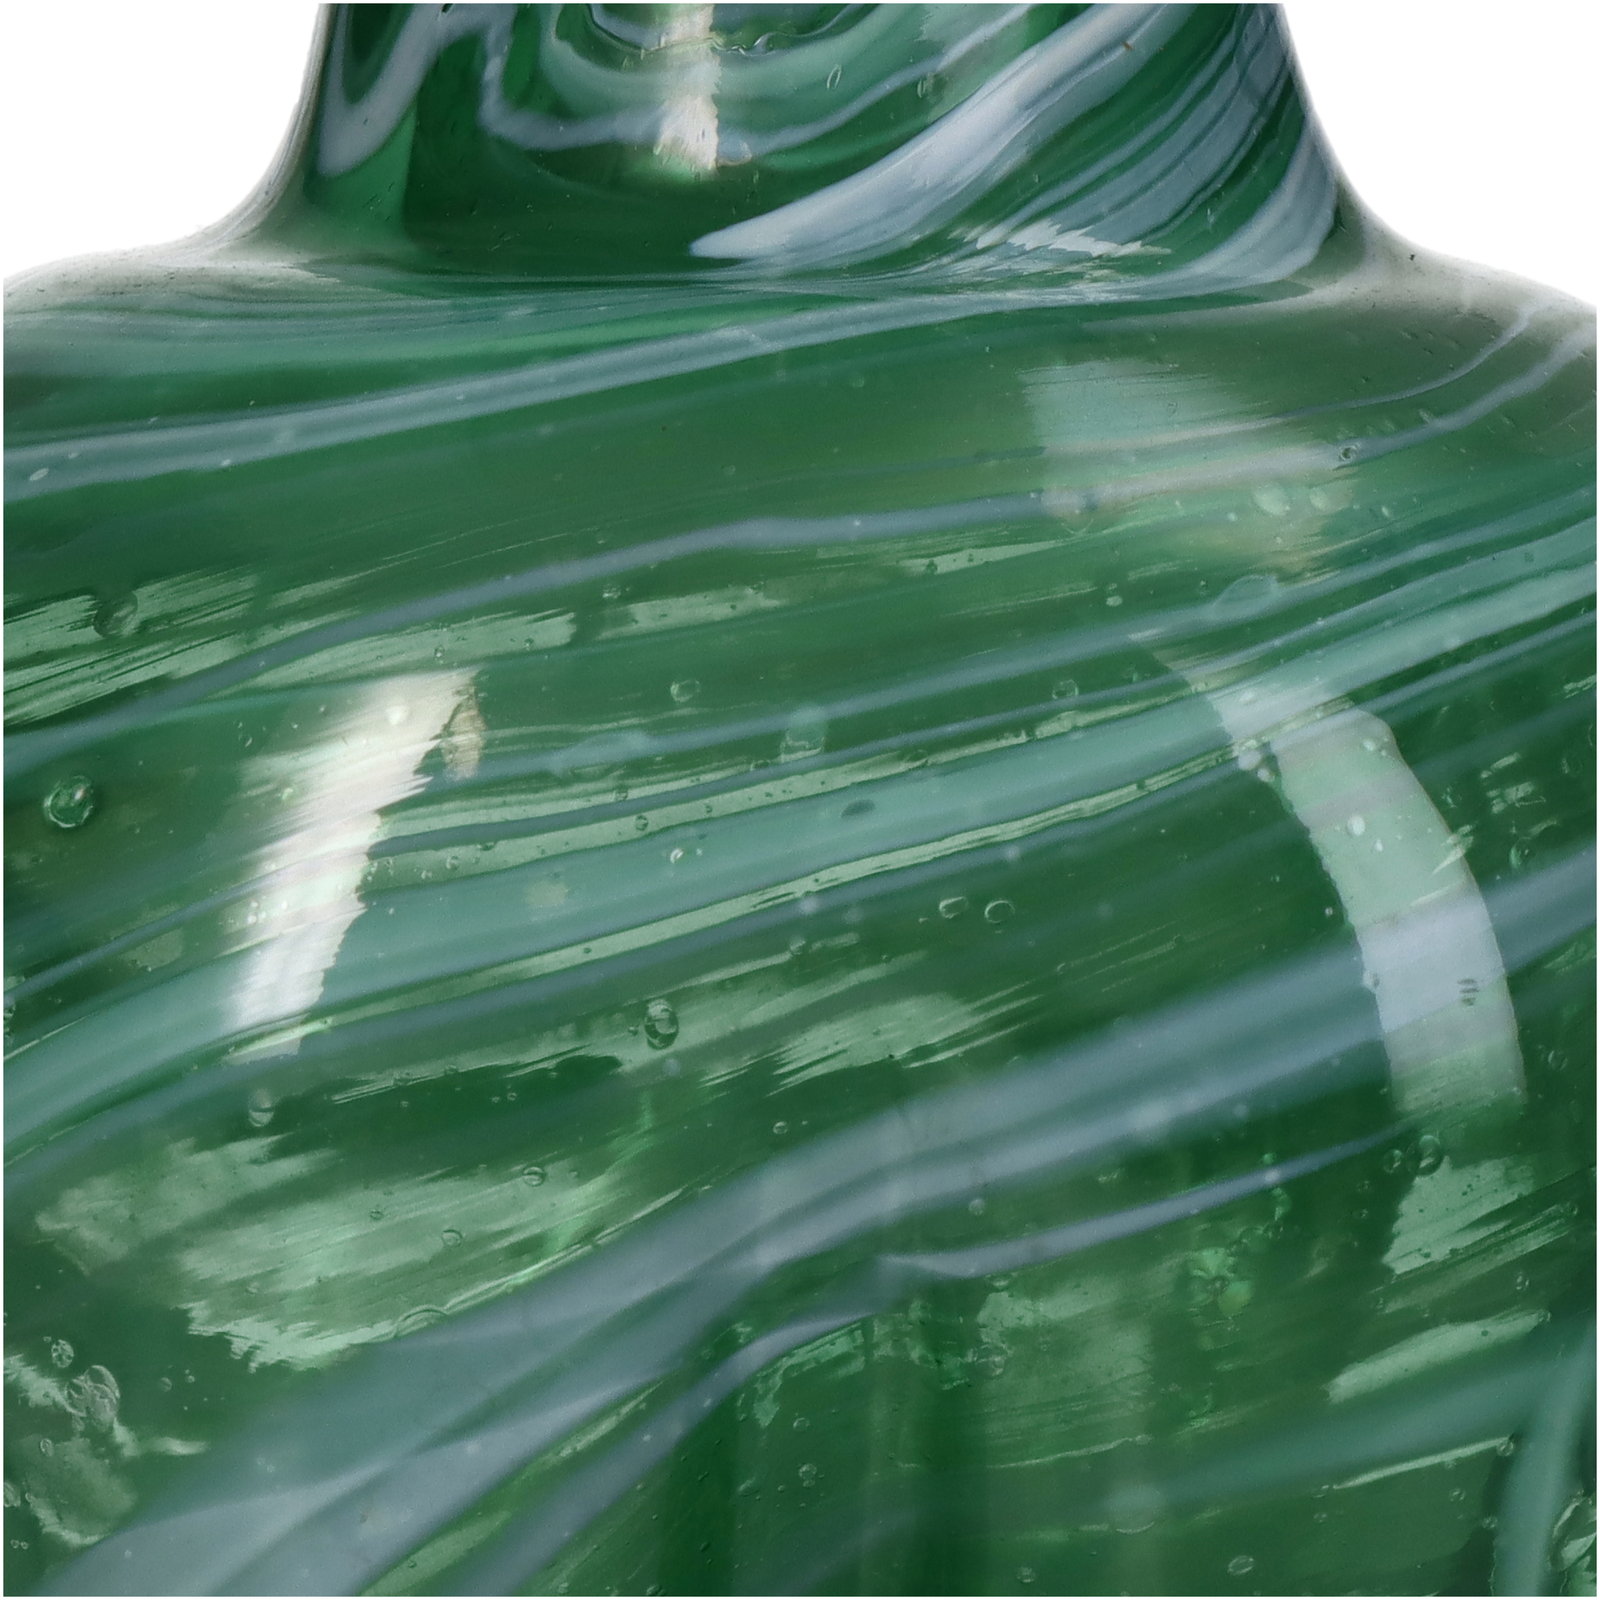 Vase Glass Green 14.5x14.5x15cm